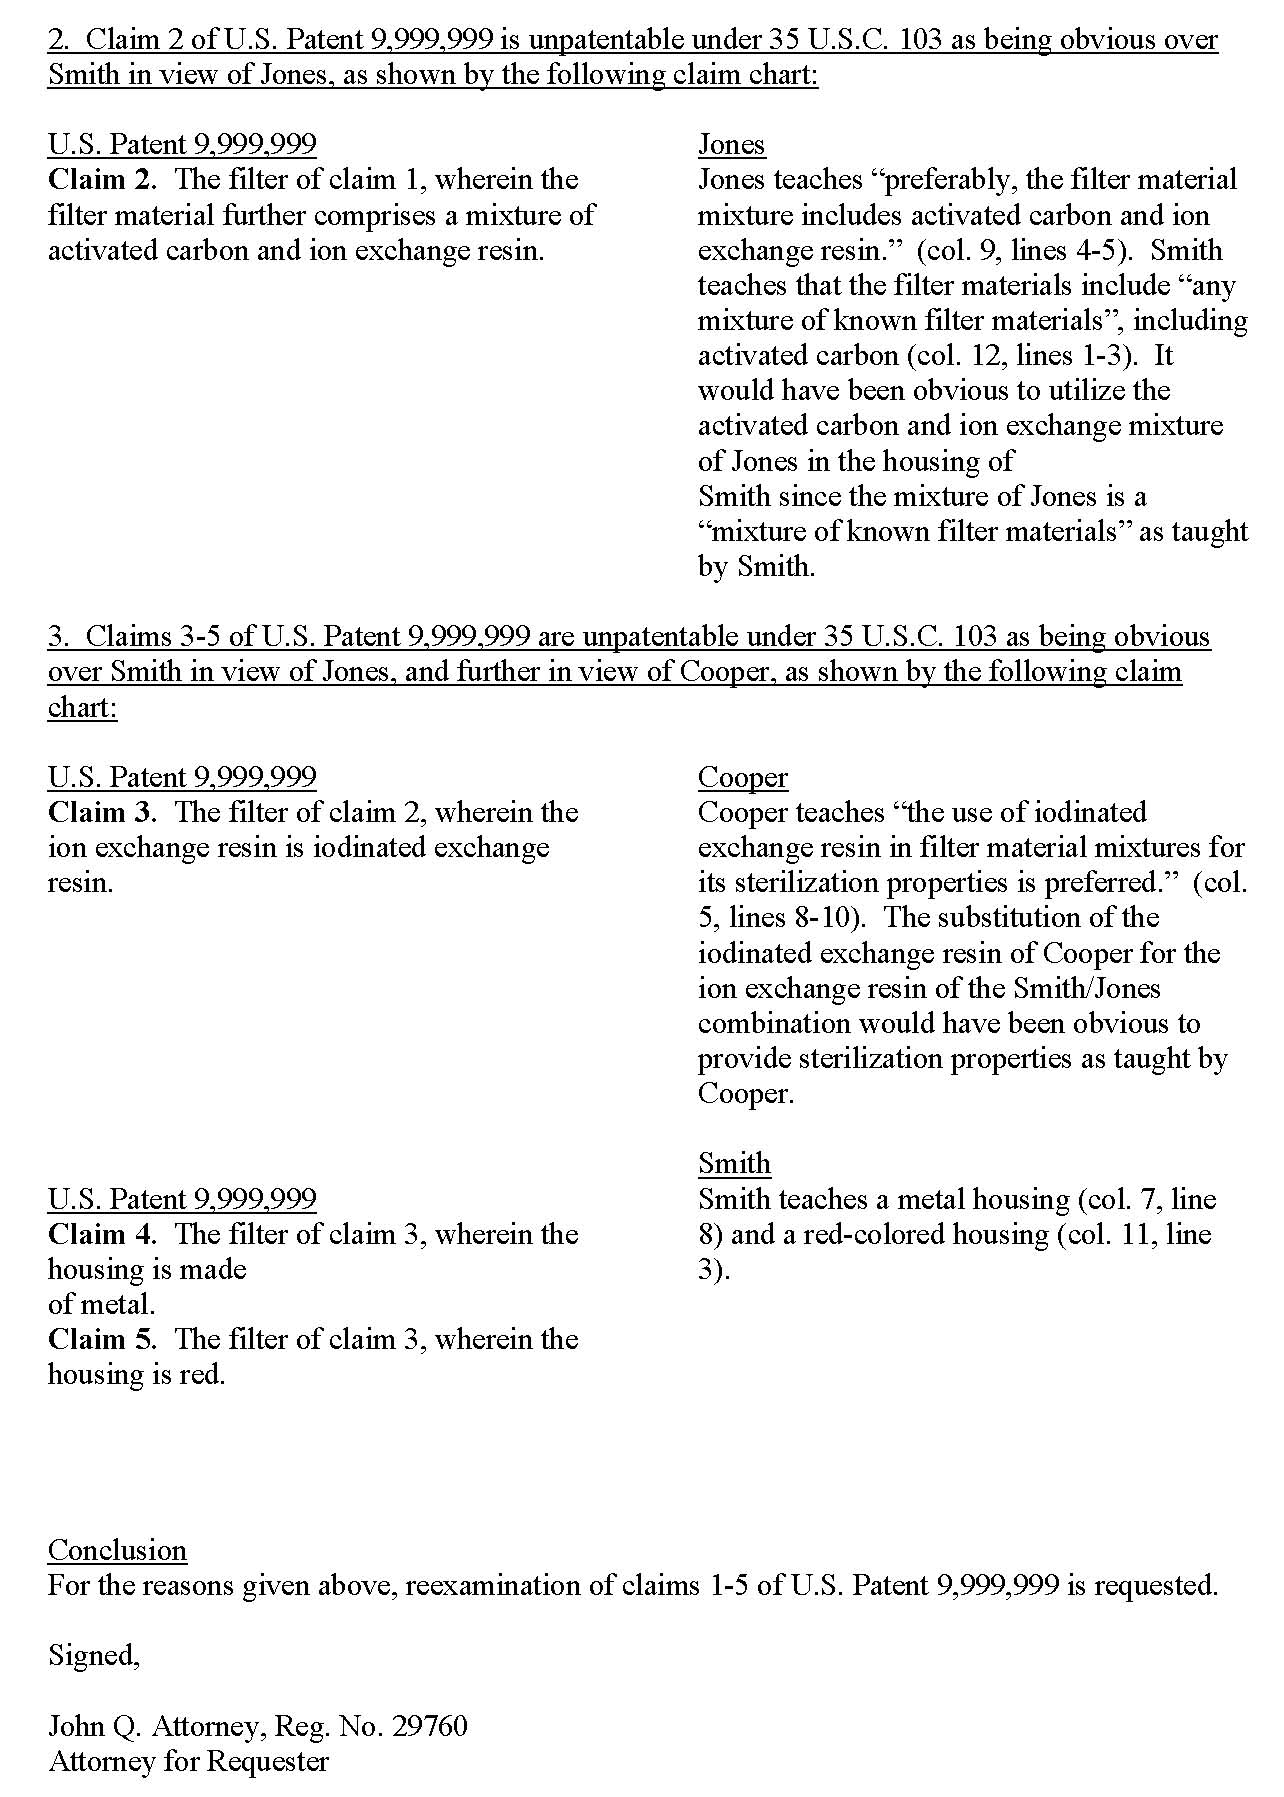 attachment to form pto/sb/58 (page 2)